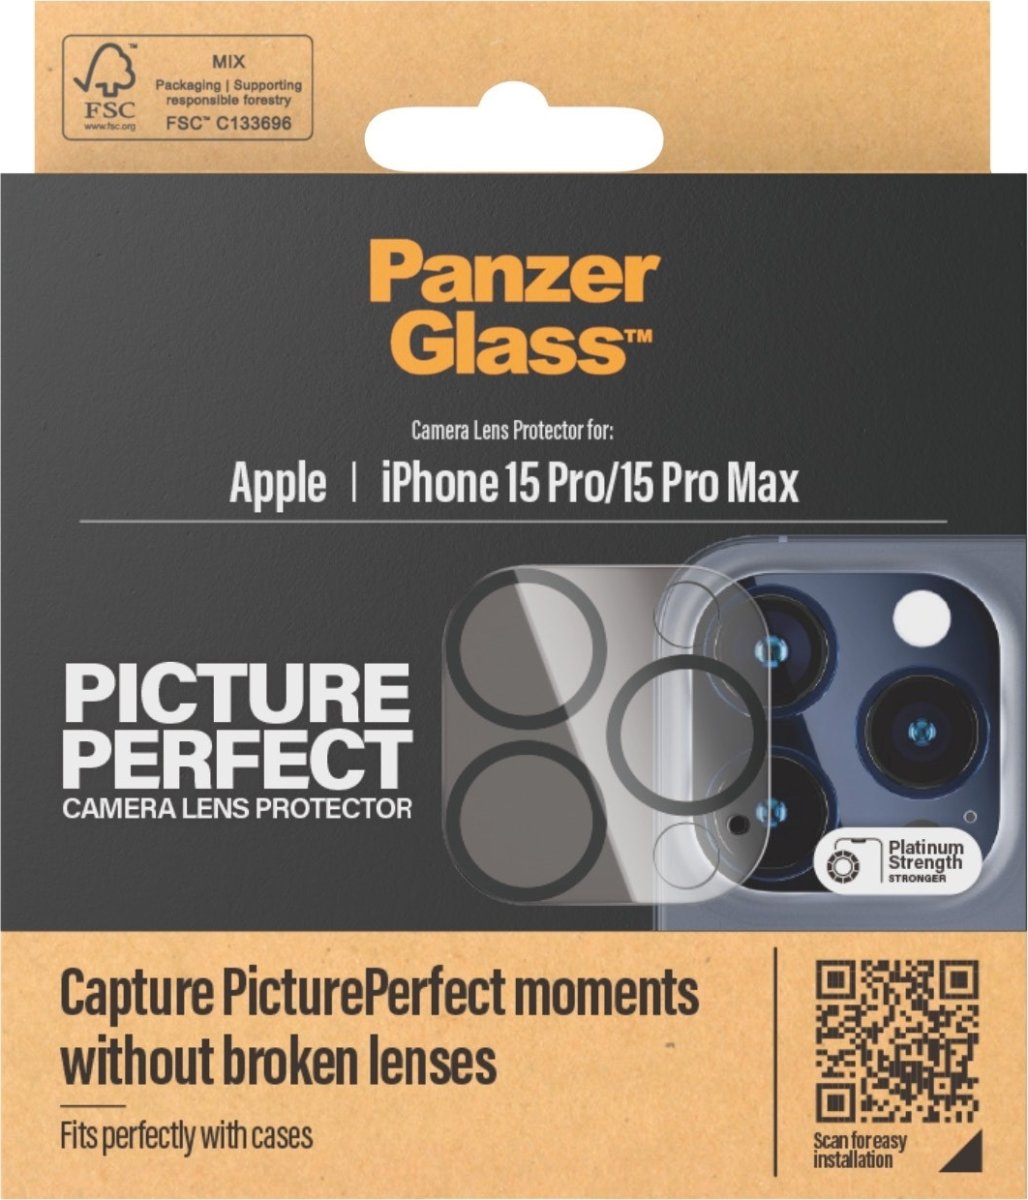 PanzerGlass PicturePerfect iPhone 15 Pro/Pro Max